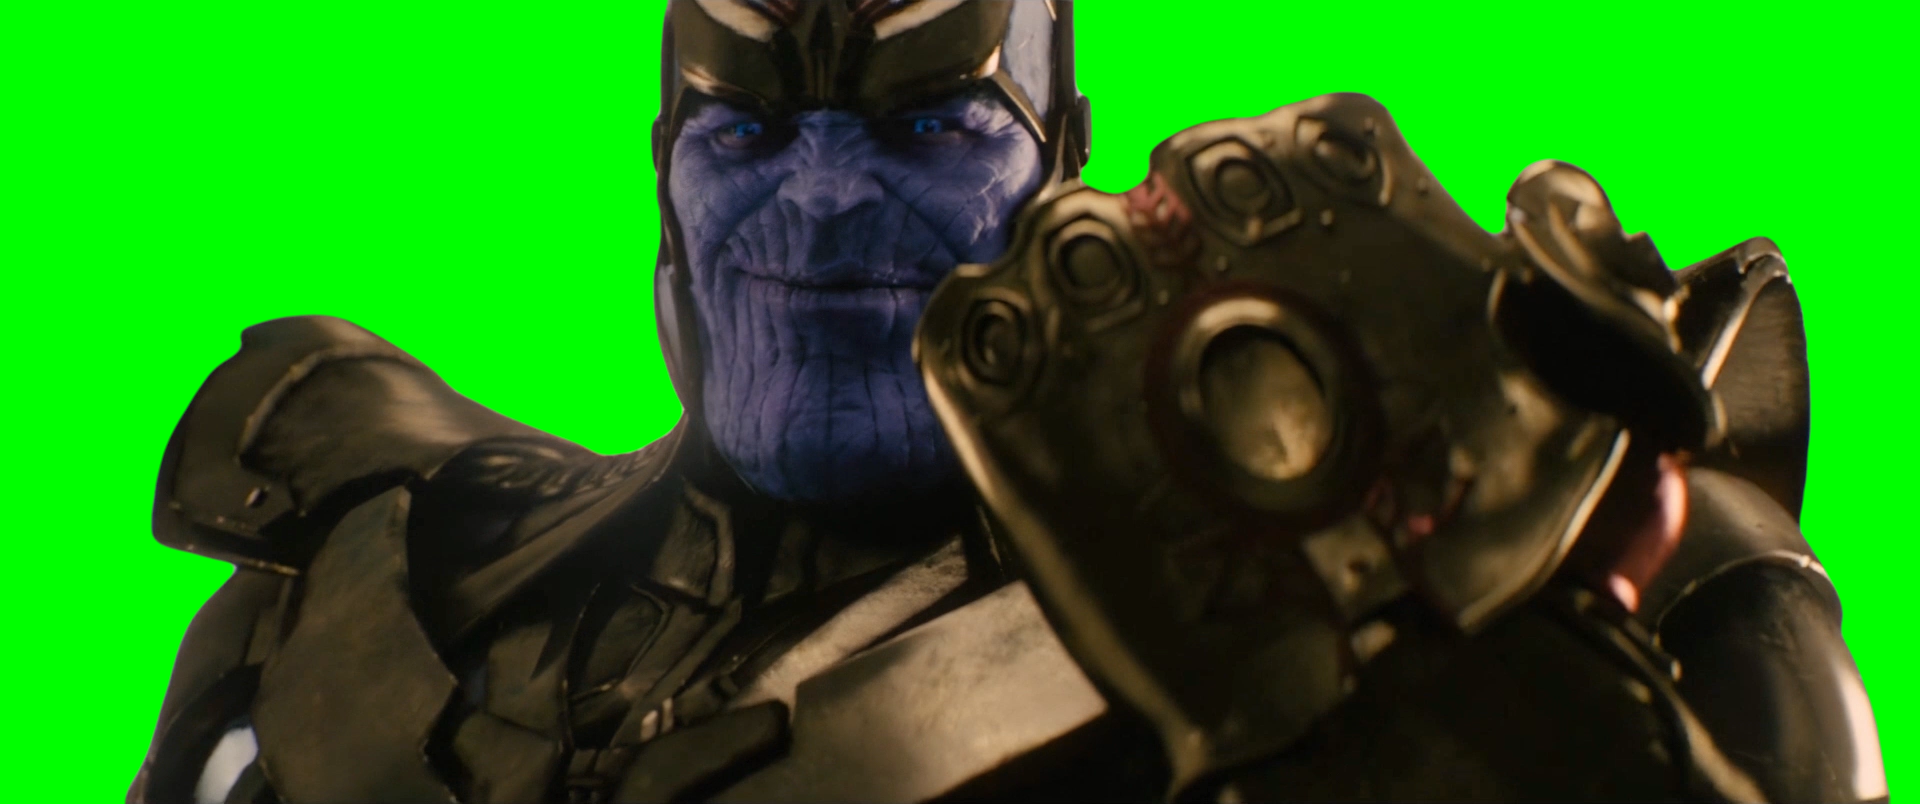 Thanos - Fine I'll Do It Myself meme (Green Screen)